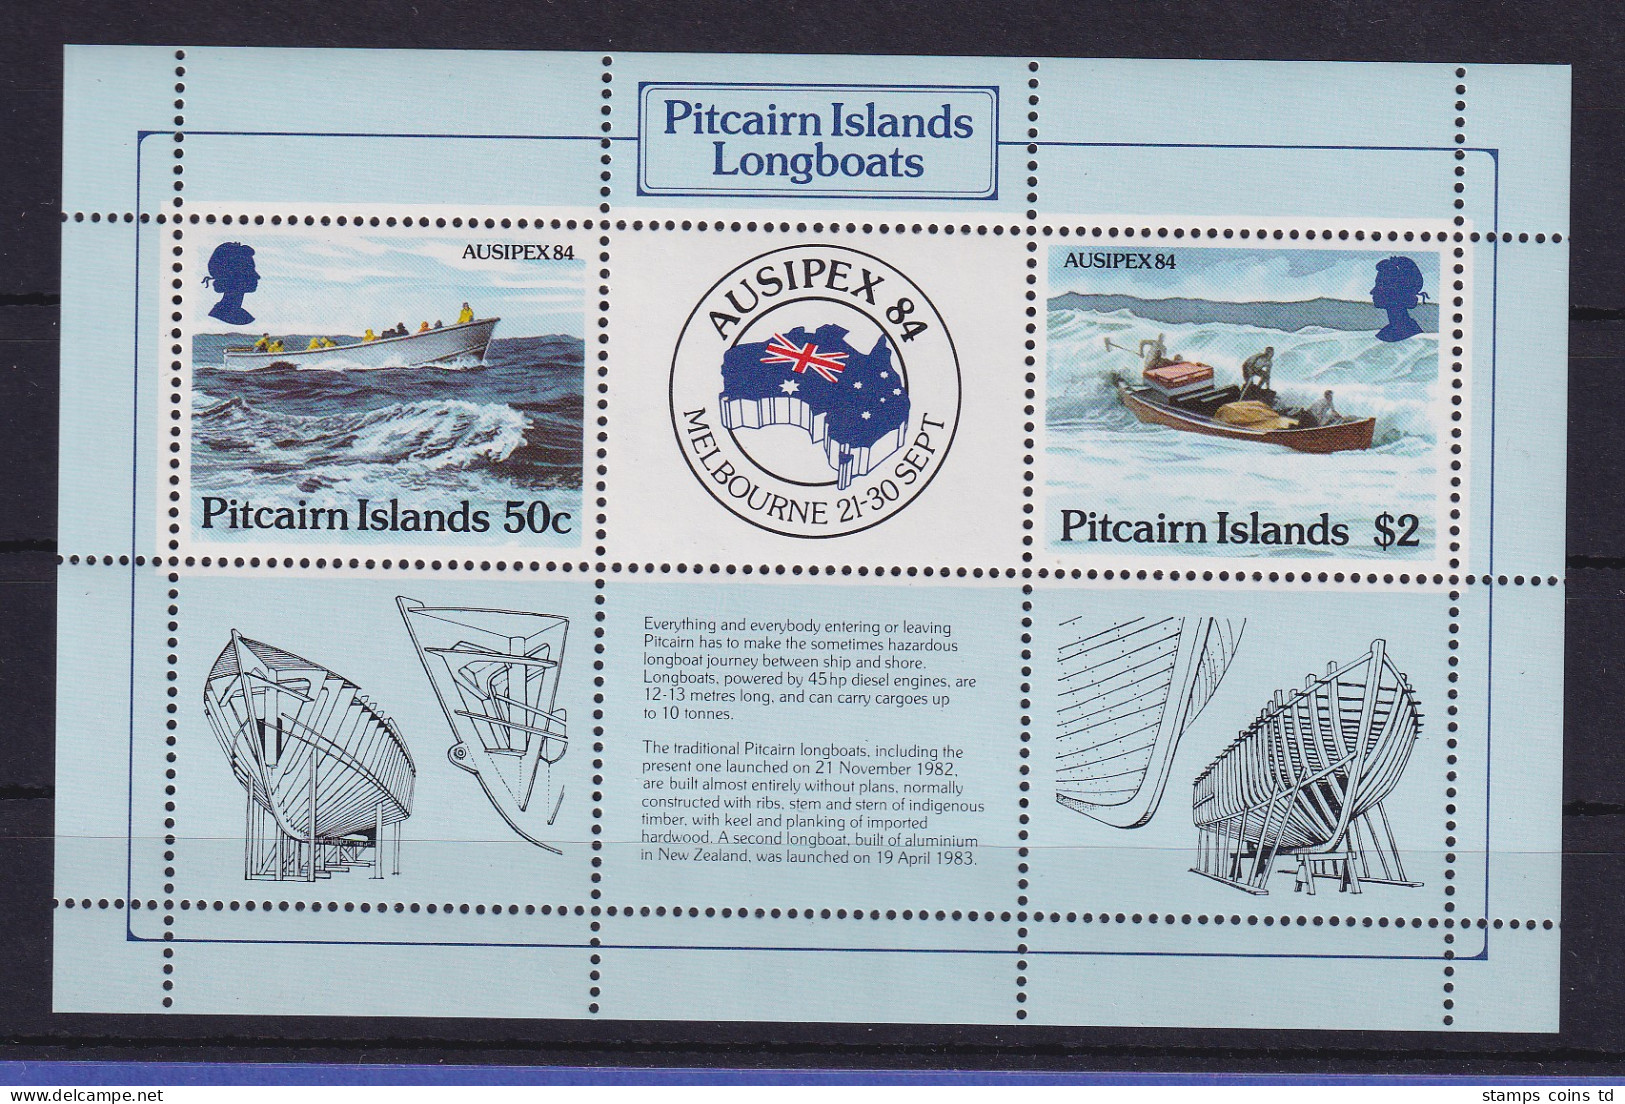 Pitcairn Islands 1984 Briefmarkenausstellung AUSIPEX 84 Mi.-Nr. Block 7 ** - Pitcairn